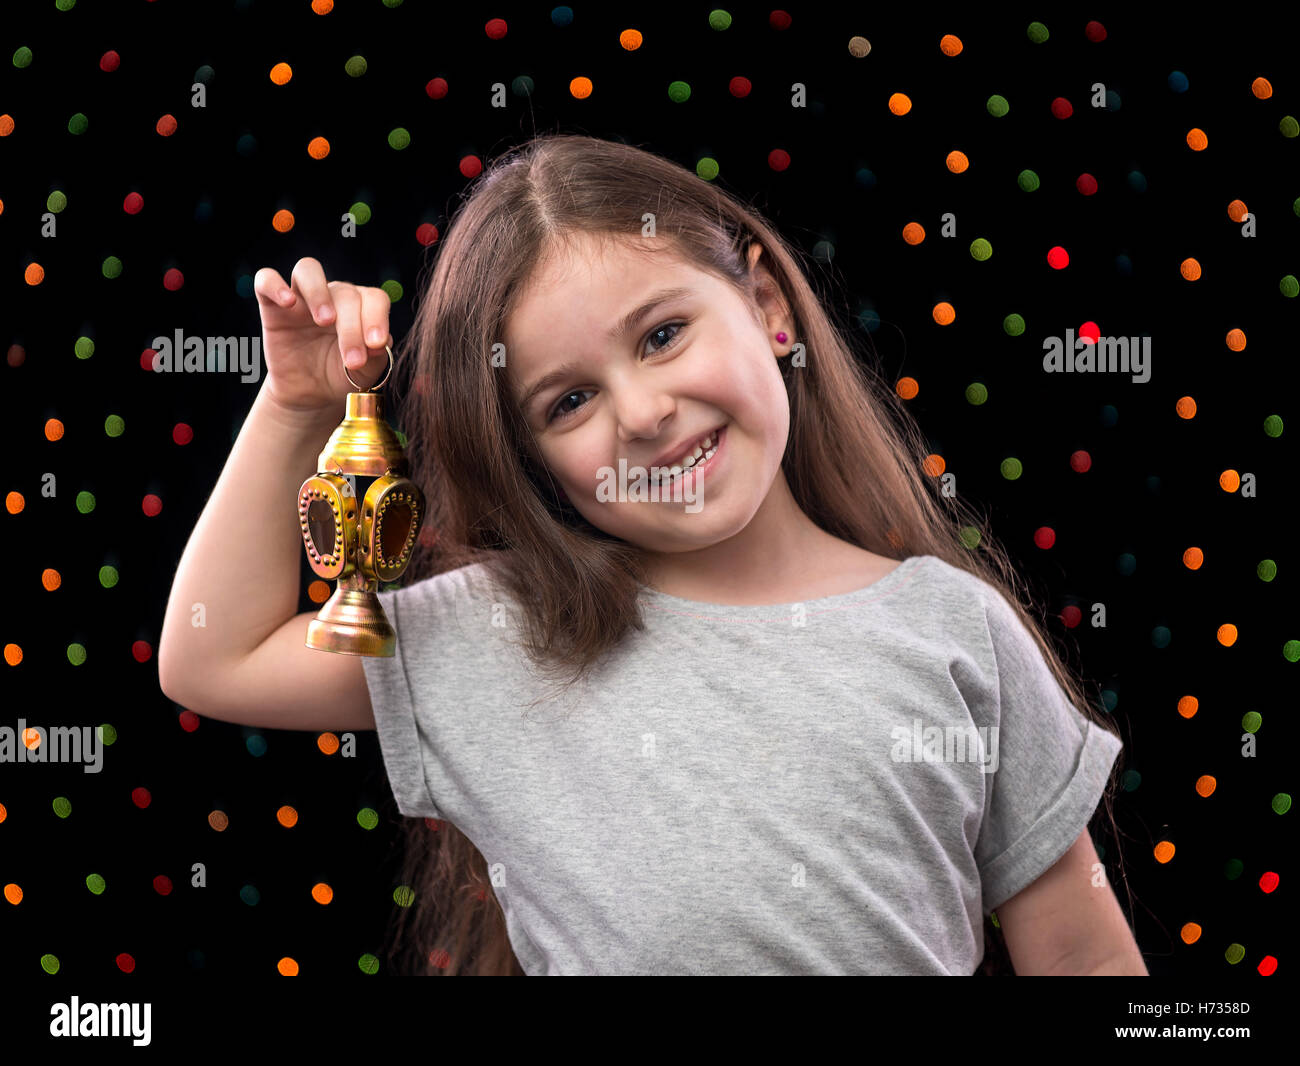 Sweet Little Girl Celebrating with Ramadan Lantern Stock Photo